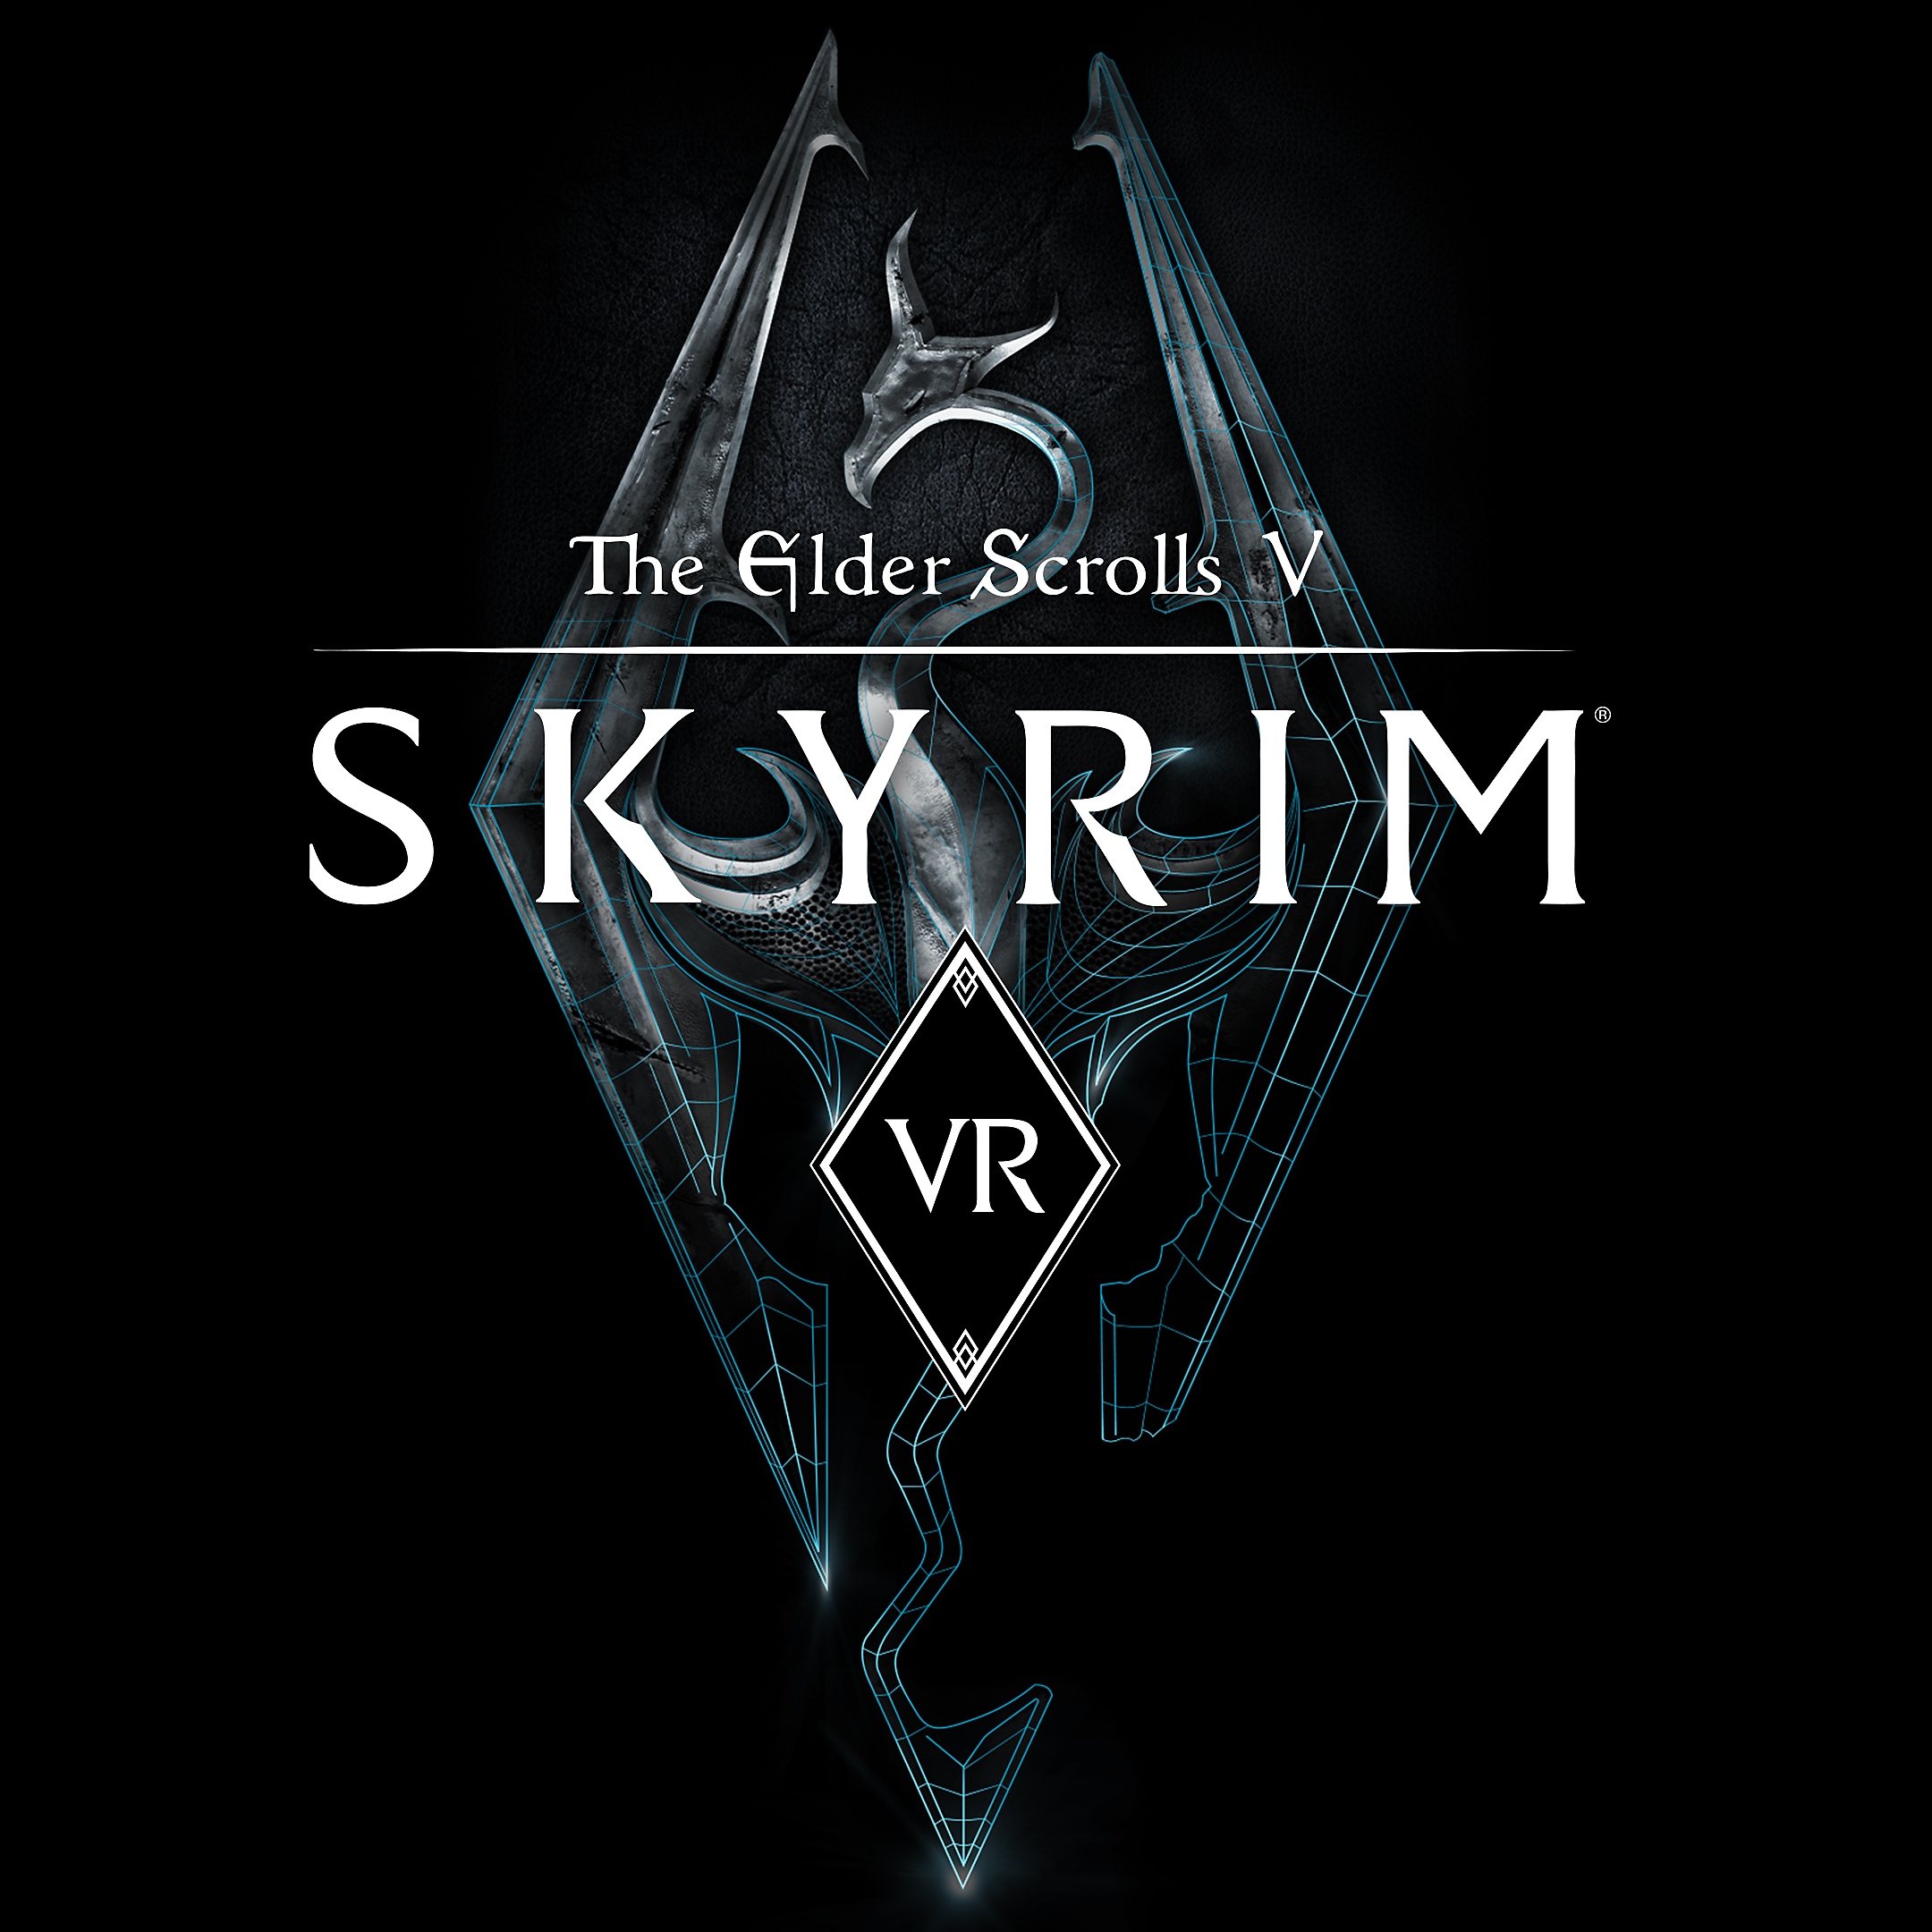 The Elder Scrolls V: Skyrim VR - Image du pack